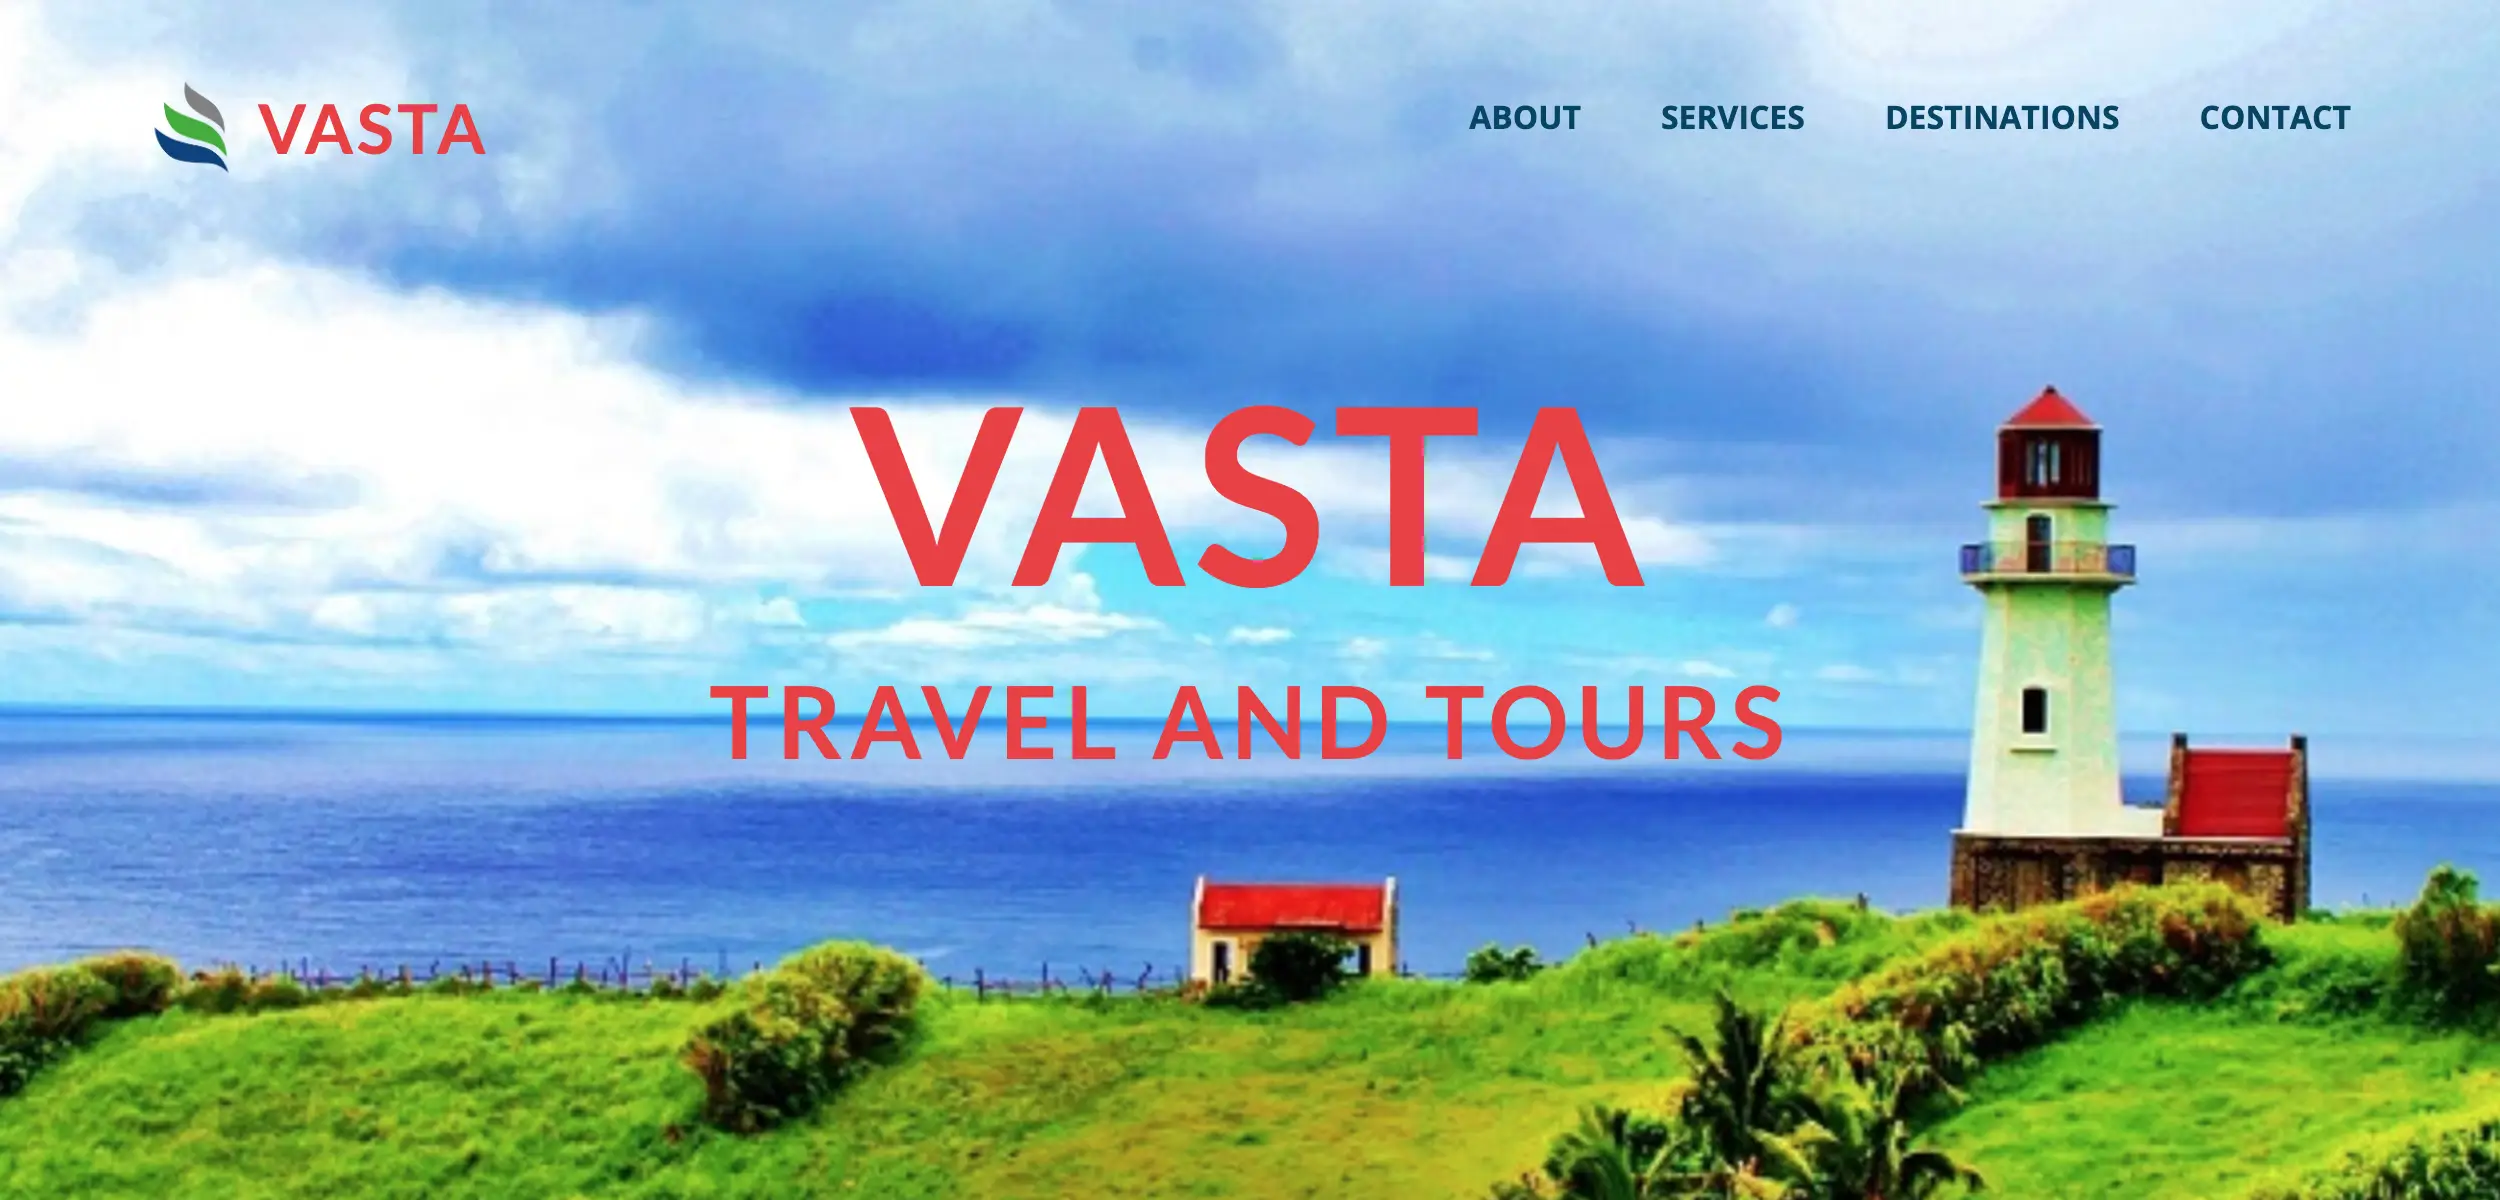 Vasta Travel and Tours company website